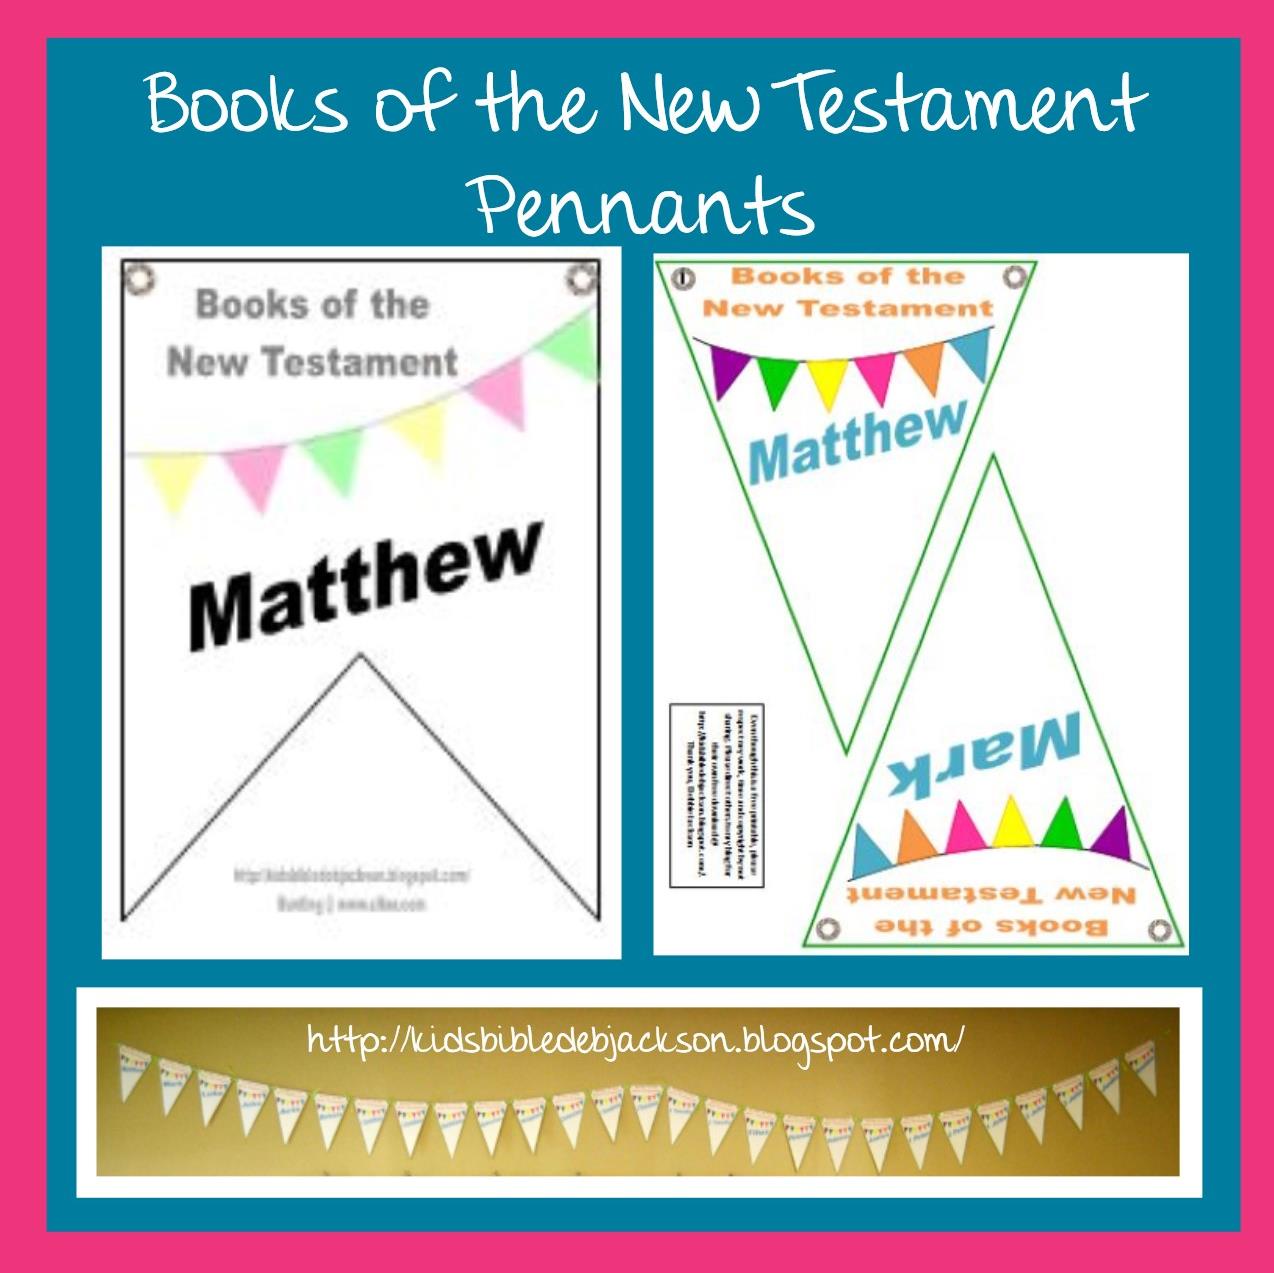 http://kidsbibledebjackson.blogspot.com/2014/05/books-of-new-testament-pennants.html